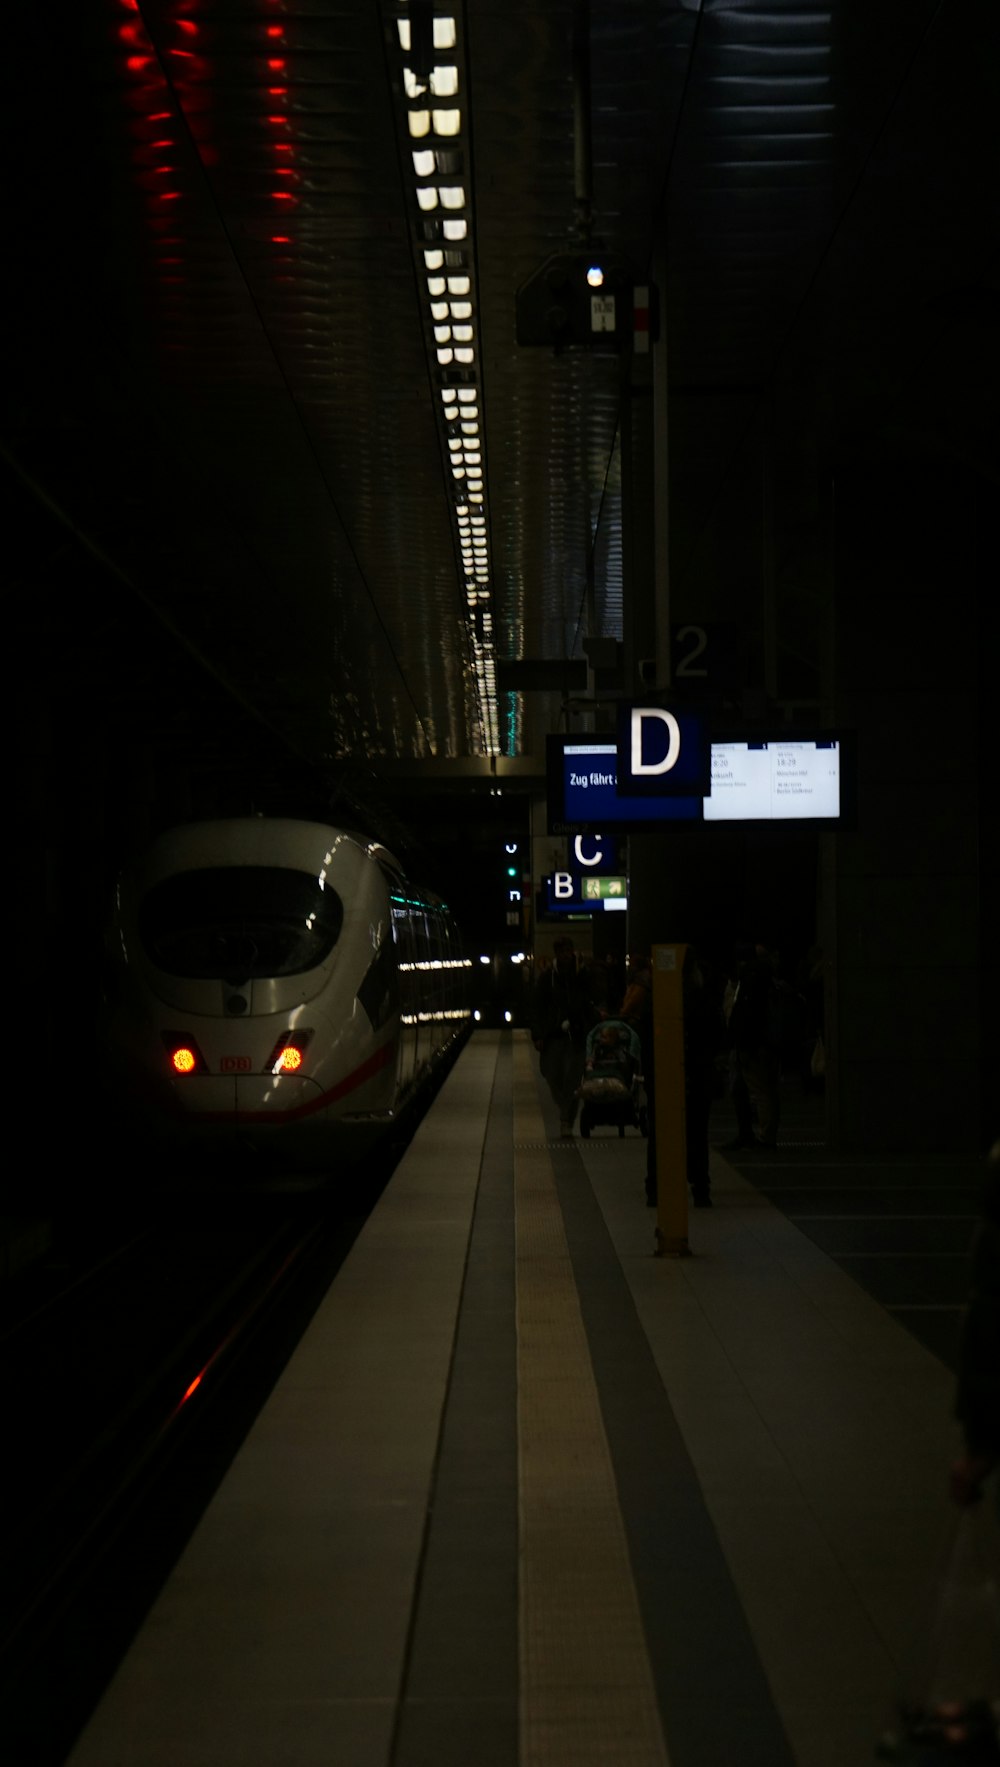 a train traveling down train tracks next to a platform